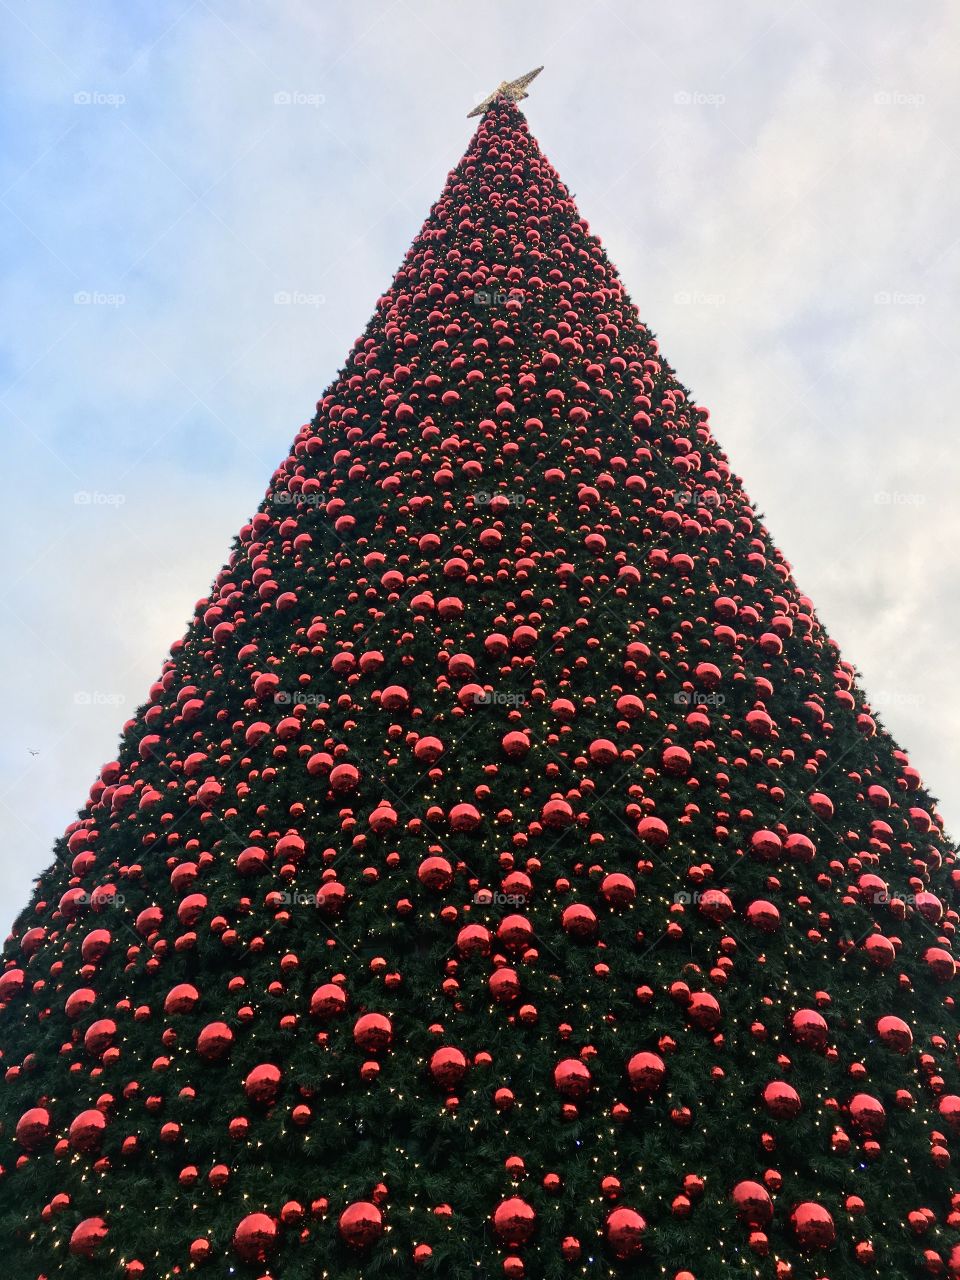 Giant Christmas tree 